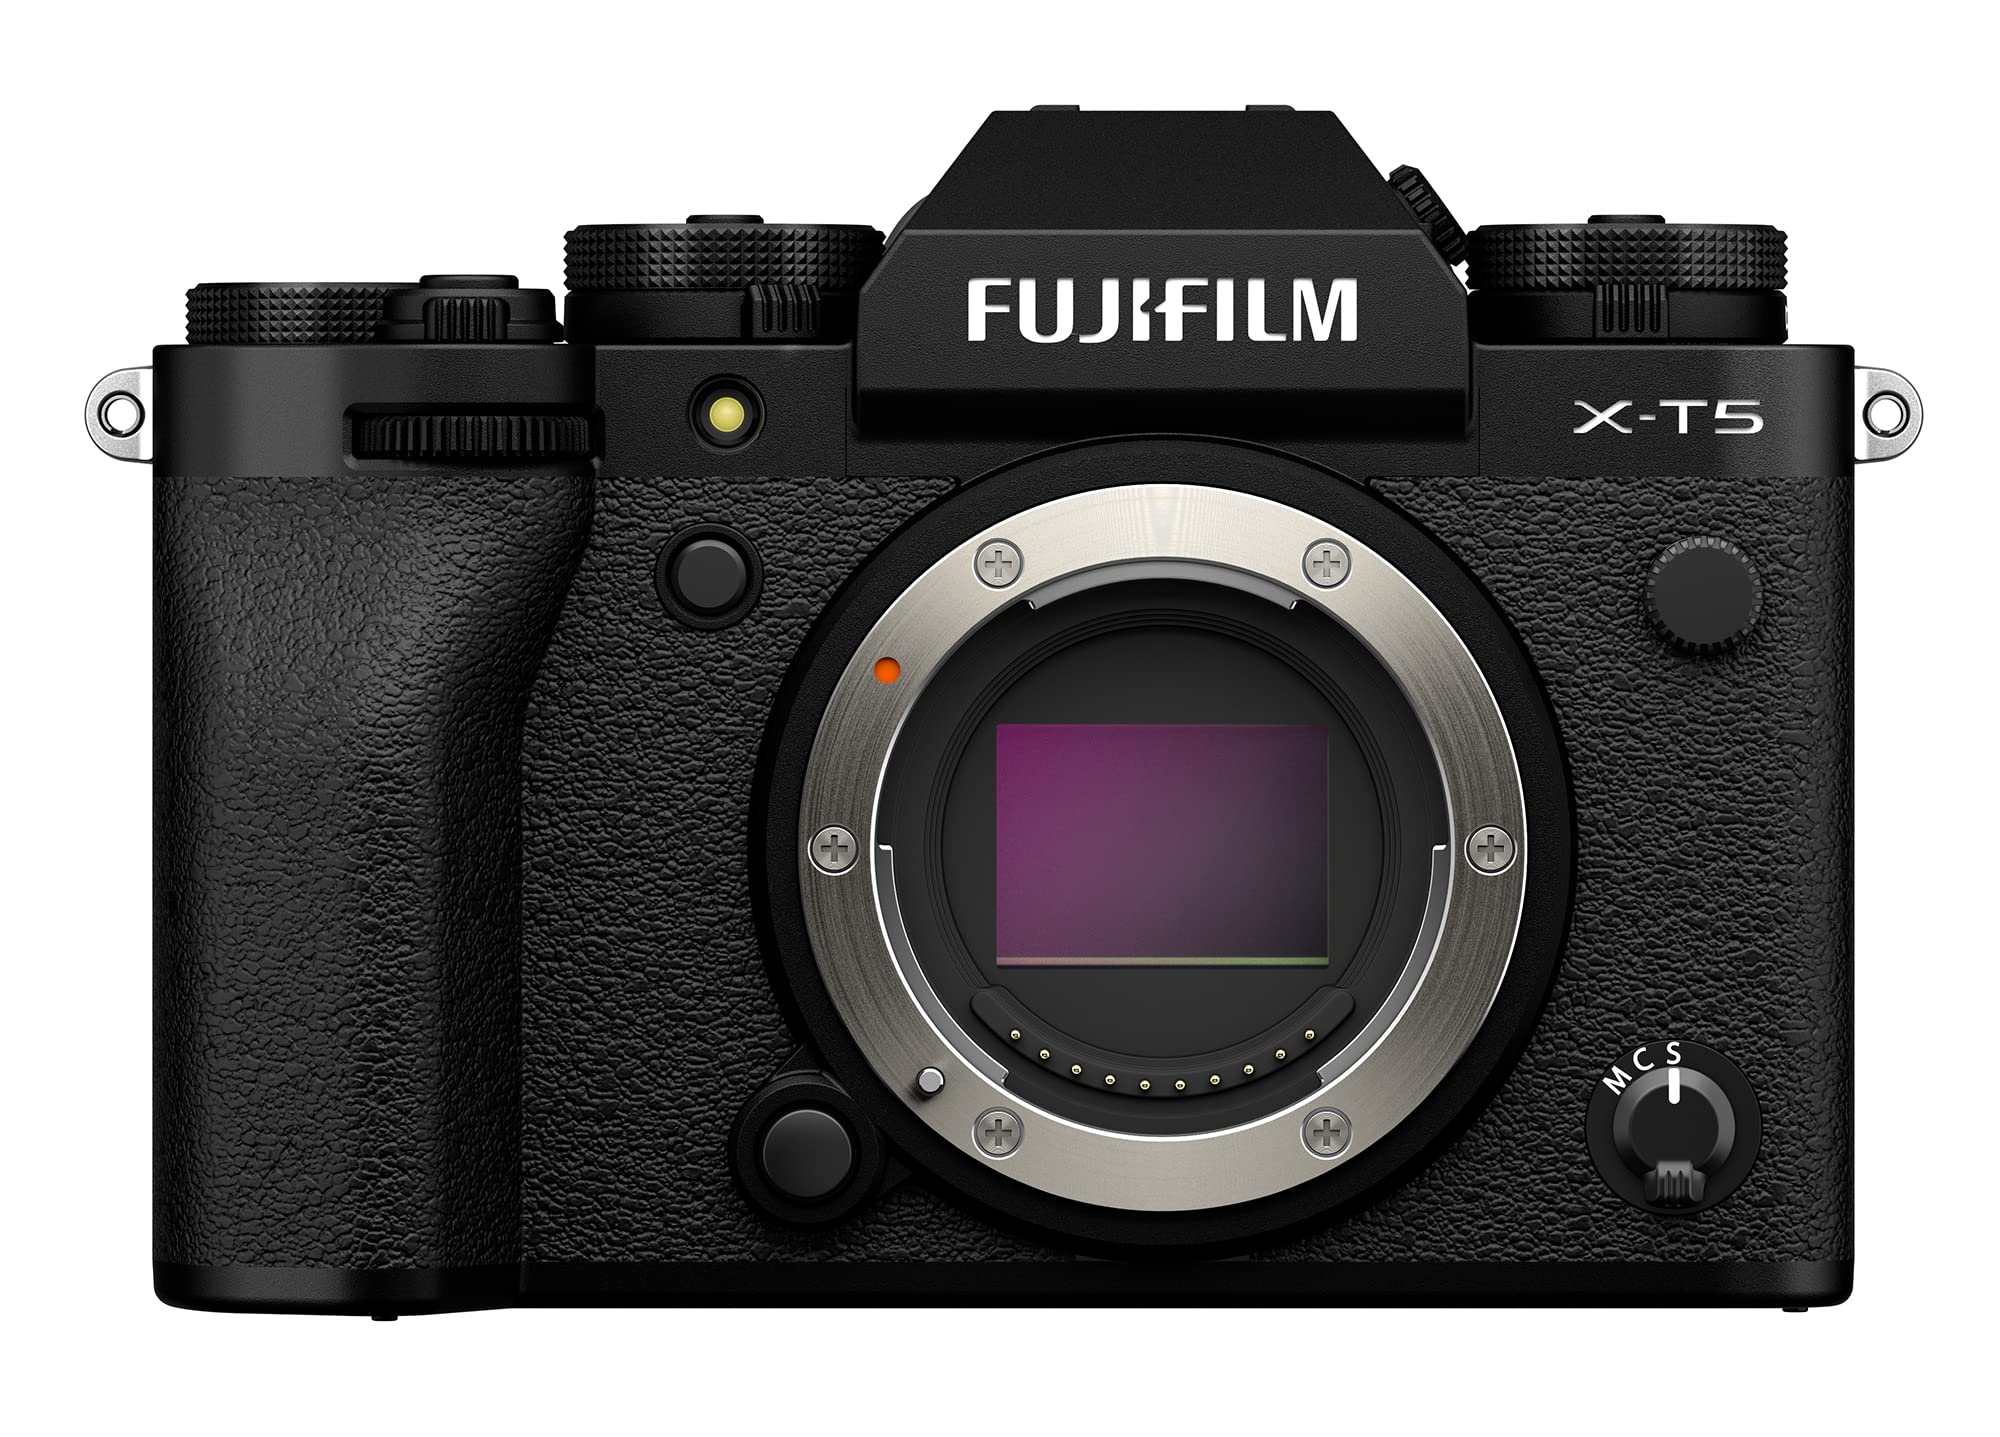 Fujifilm X-T5 Mirrorless Digital Camera Body and Lens Kit